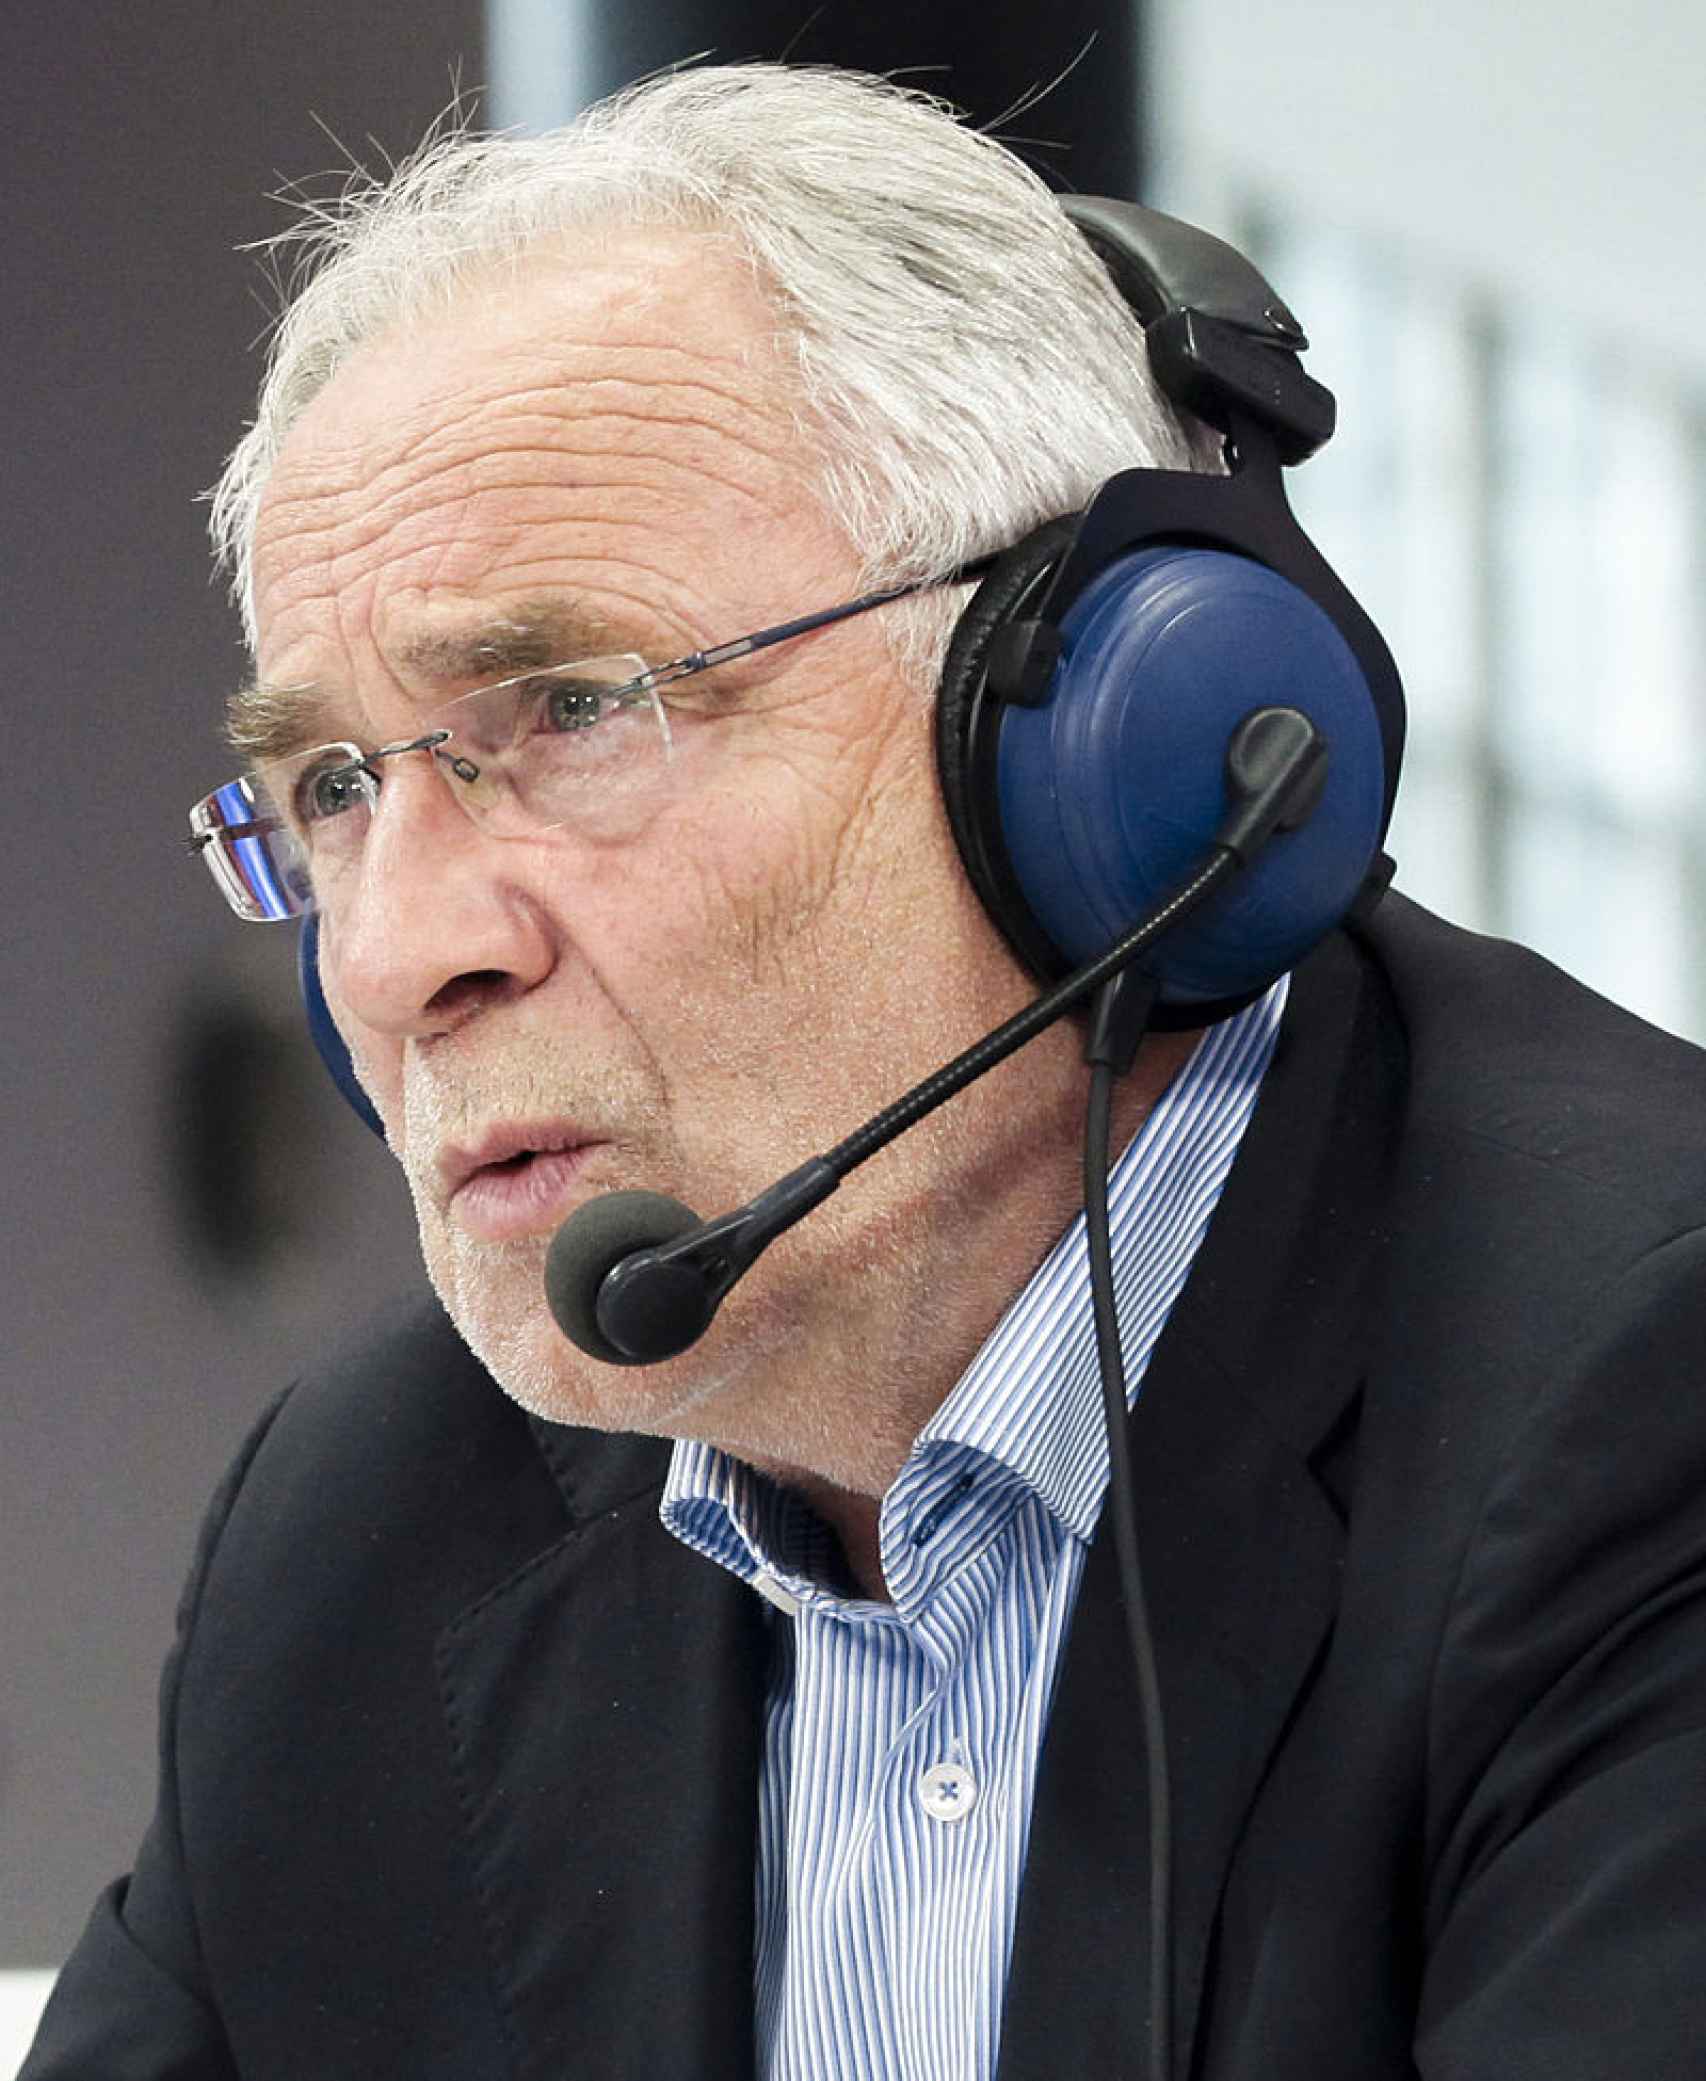 Ivo Vajgl, durante su etapa como eurodiputado.